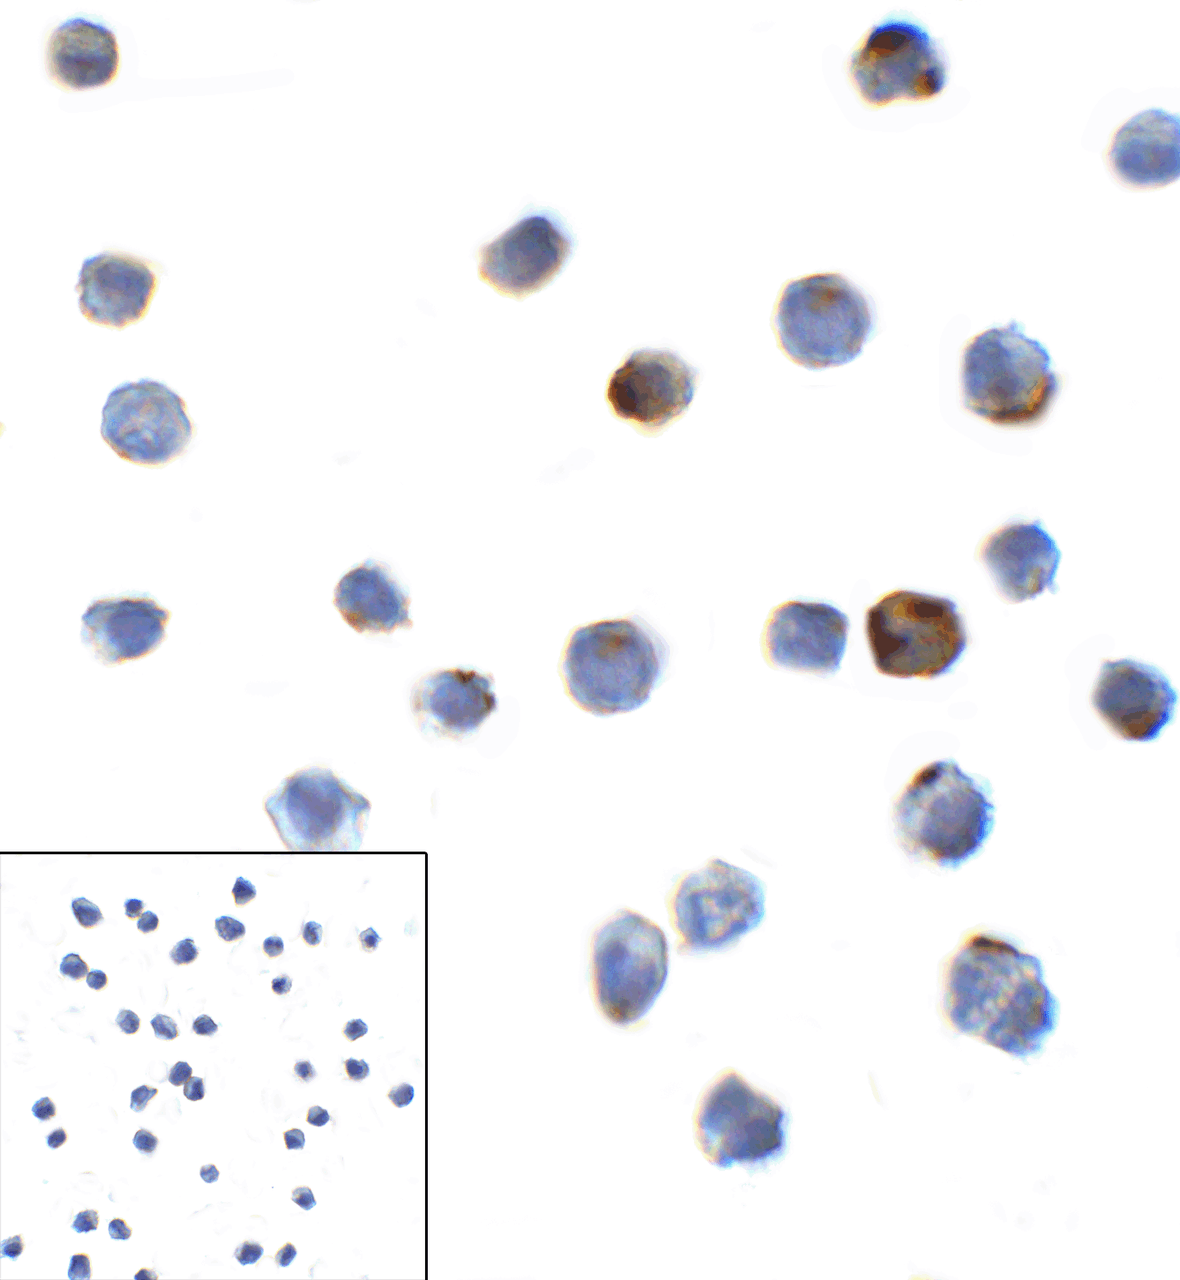 Immunocytochemistry of LAG-3 in over expressing HEK293 cells using LAG-3 antibody and control mouse IgG antibody (left corner box) at 1 ug/ml.